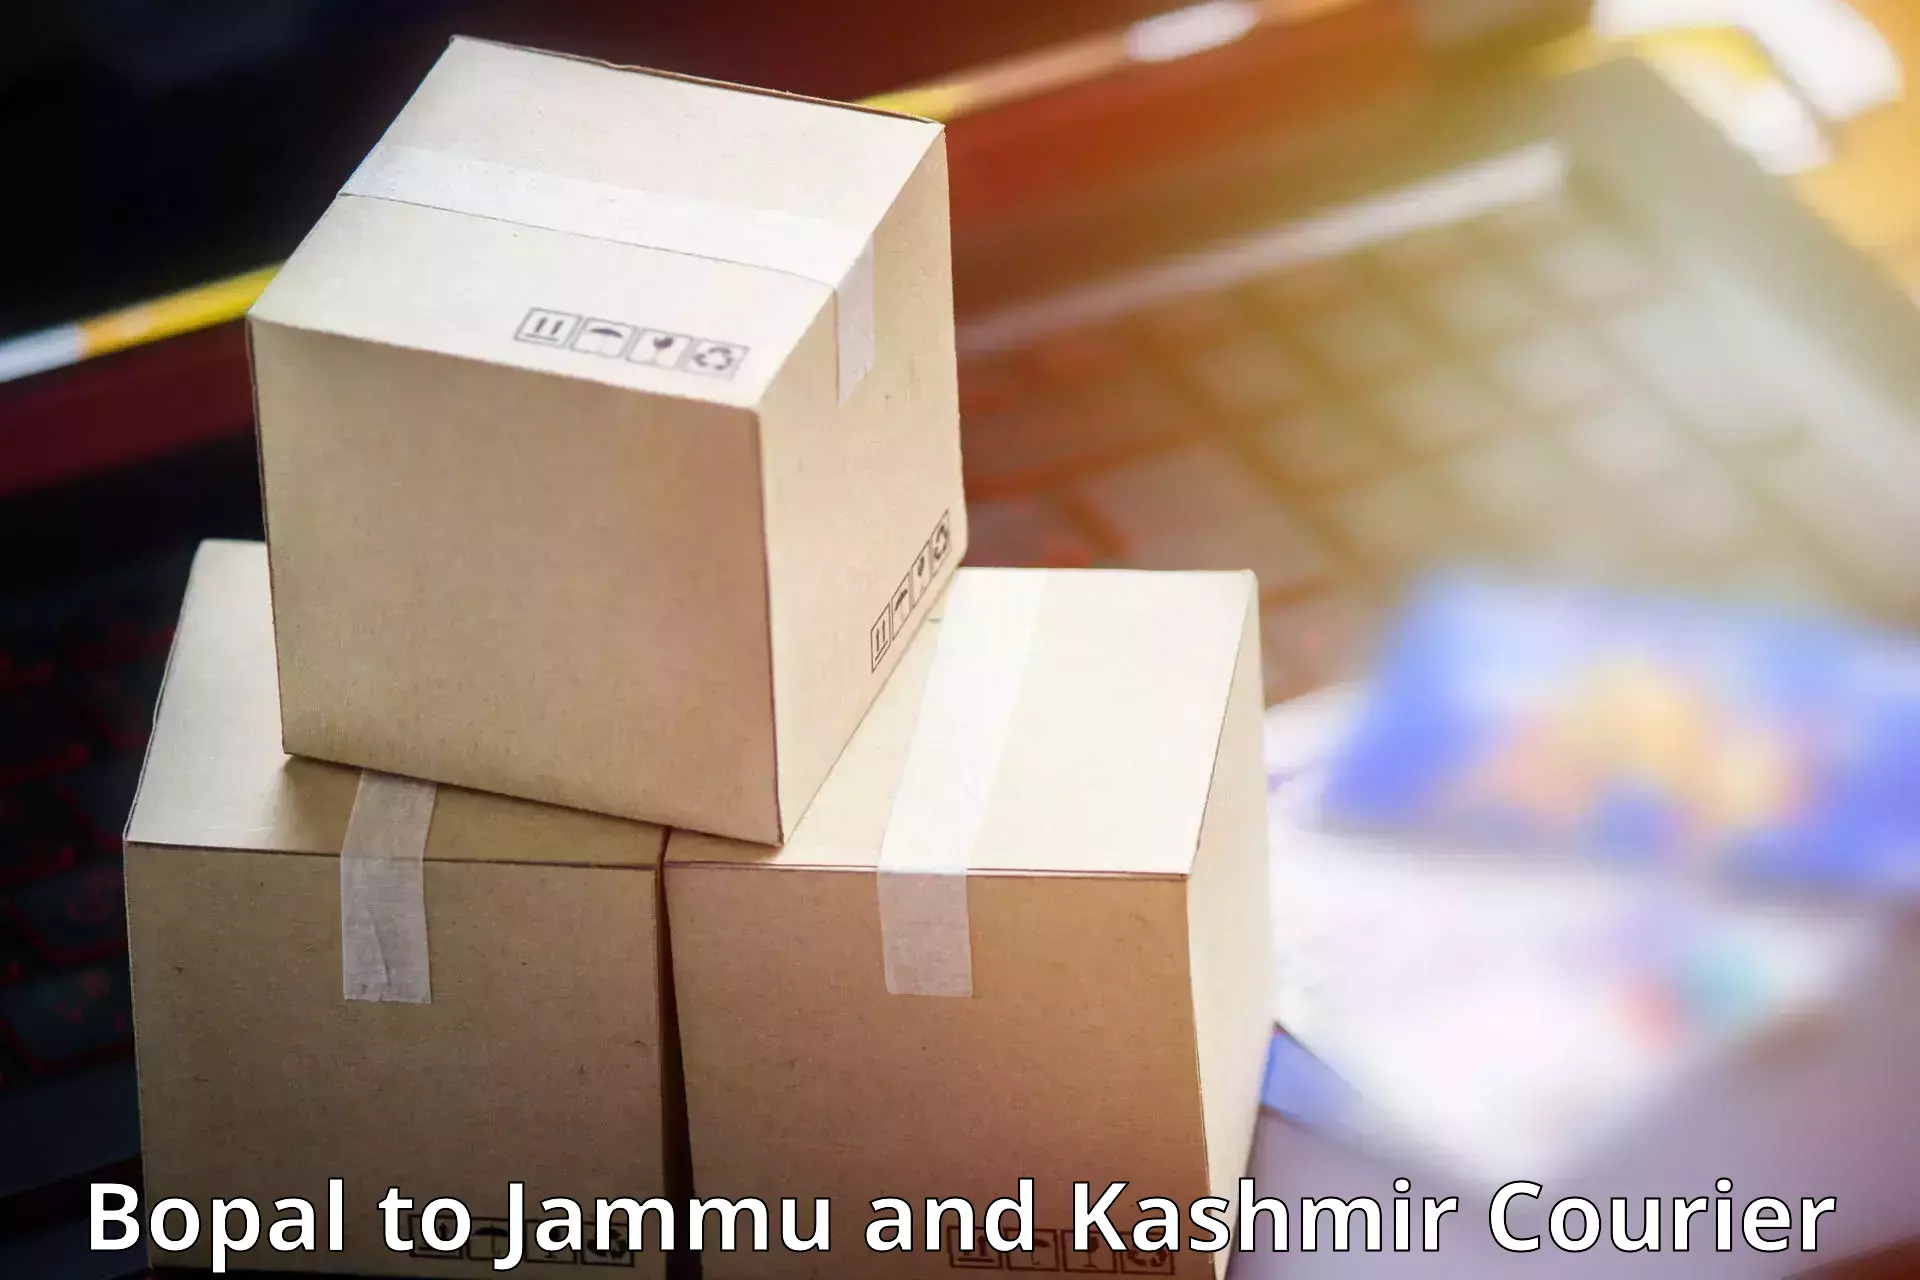 Cash on delivery service Bopal to Jakh